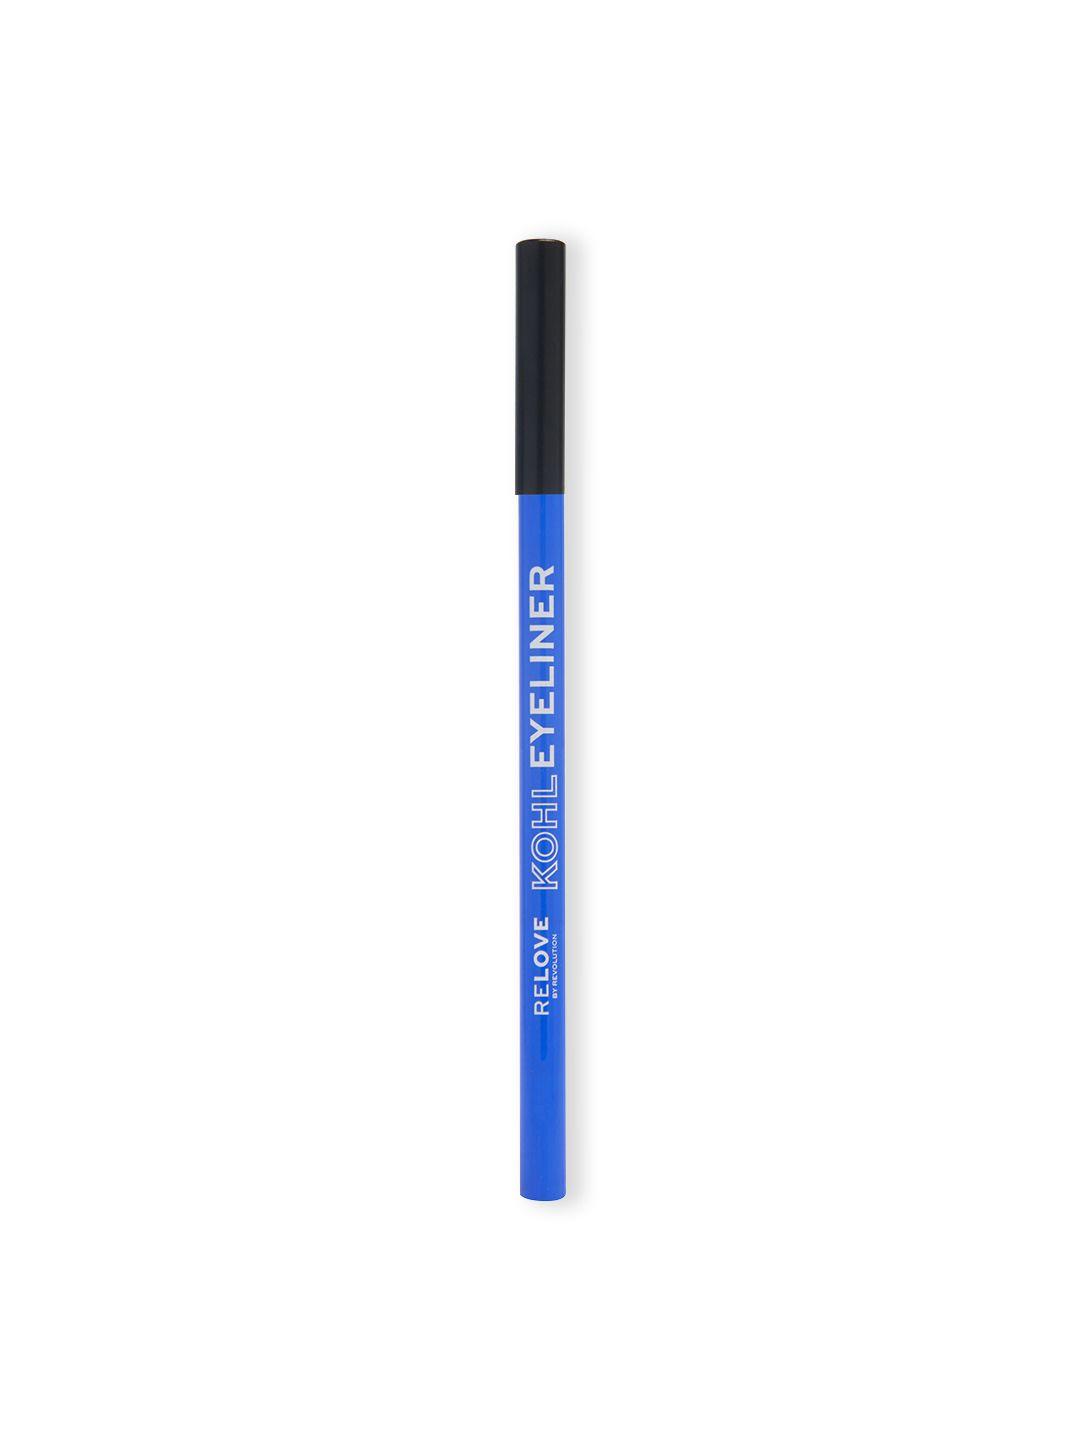 relove highly pigmented matte finish kohl eyeliner pencil 1.2 g - blue